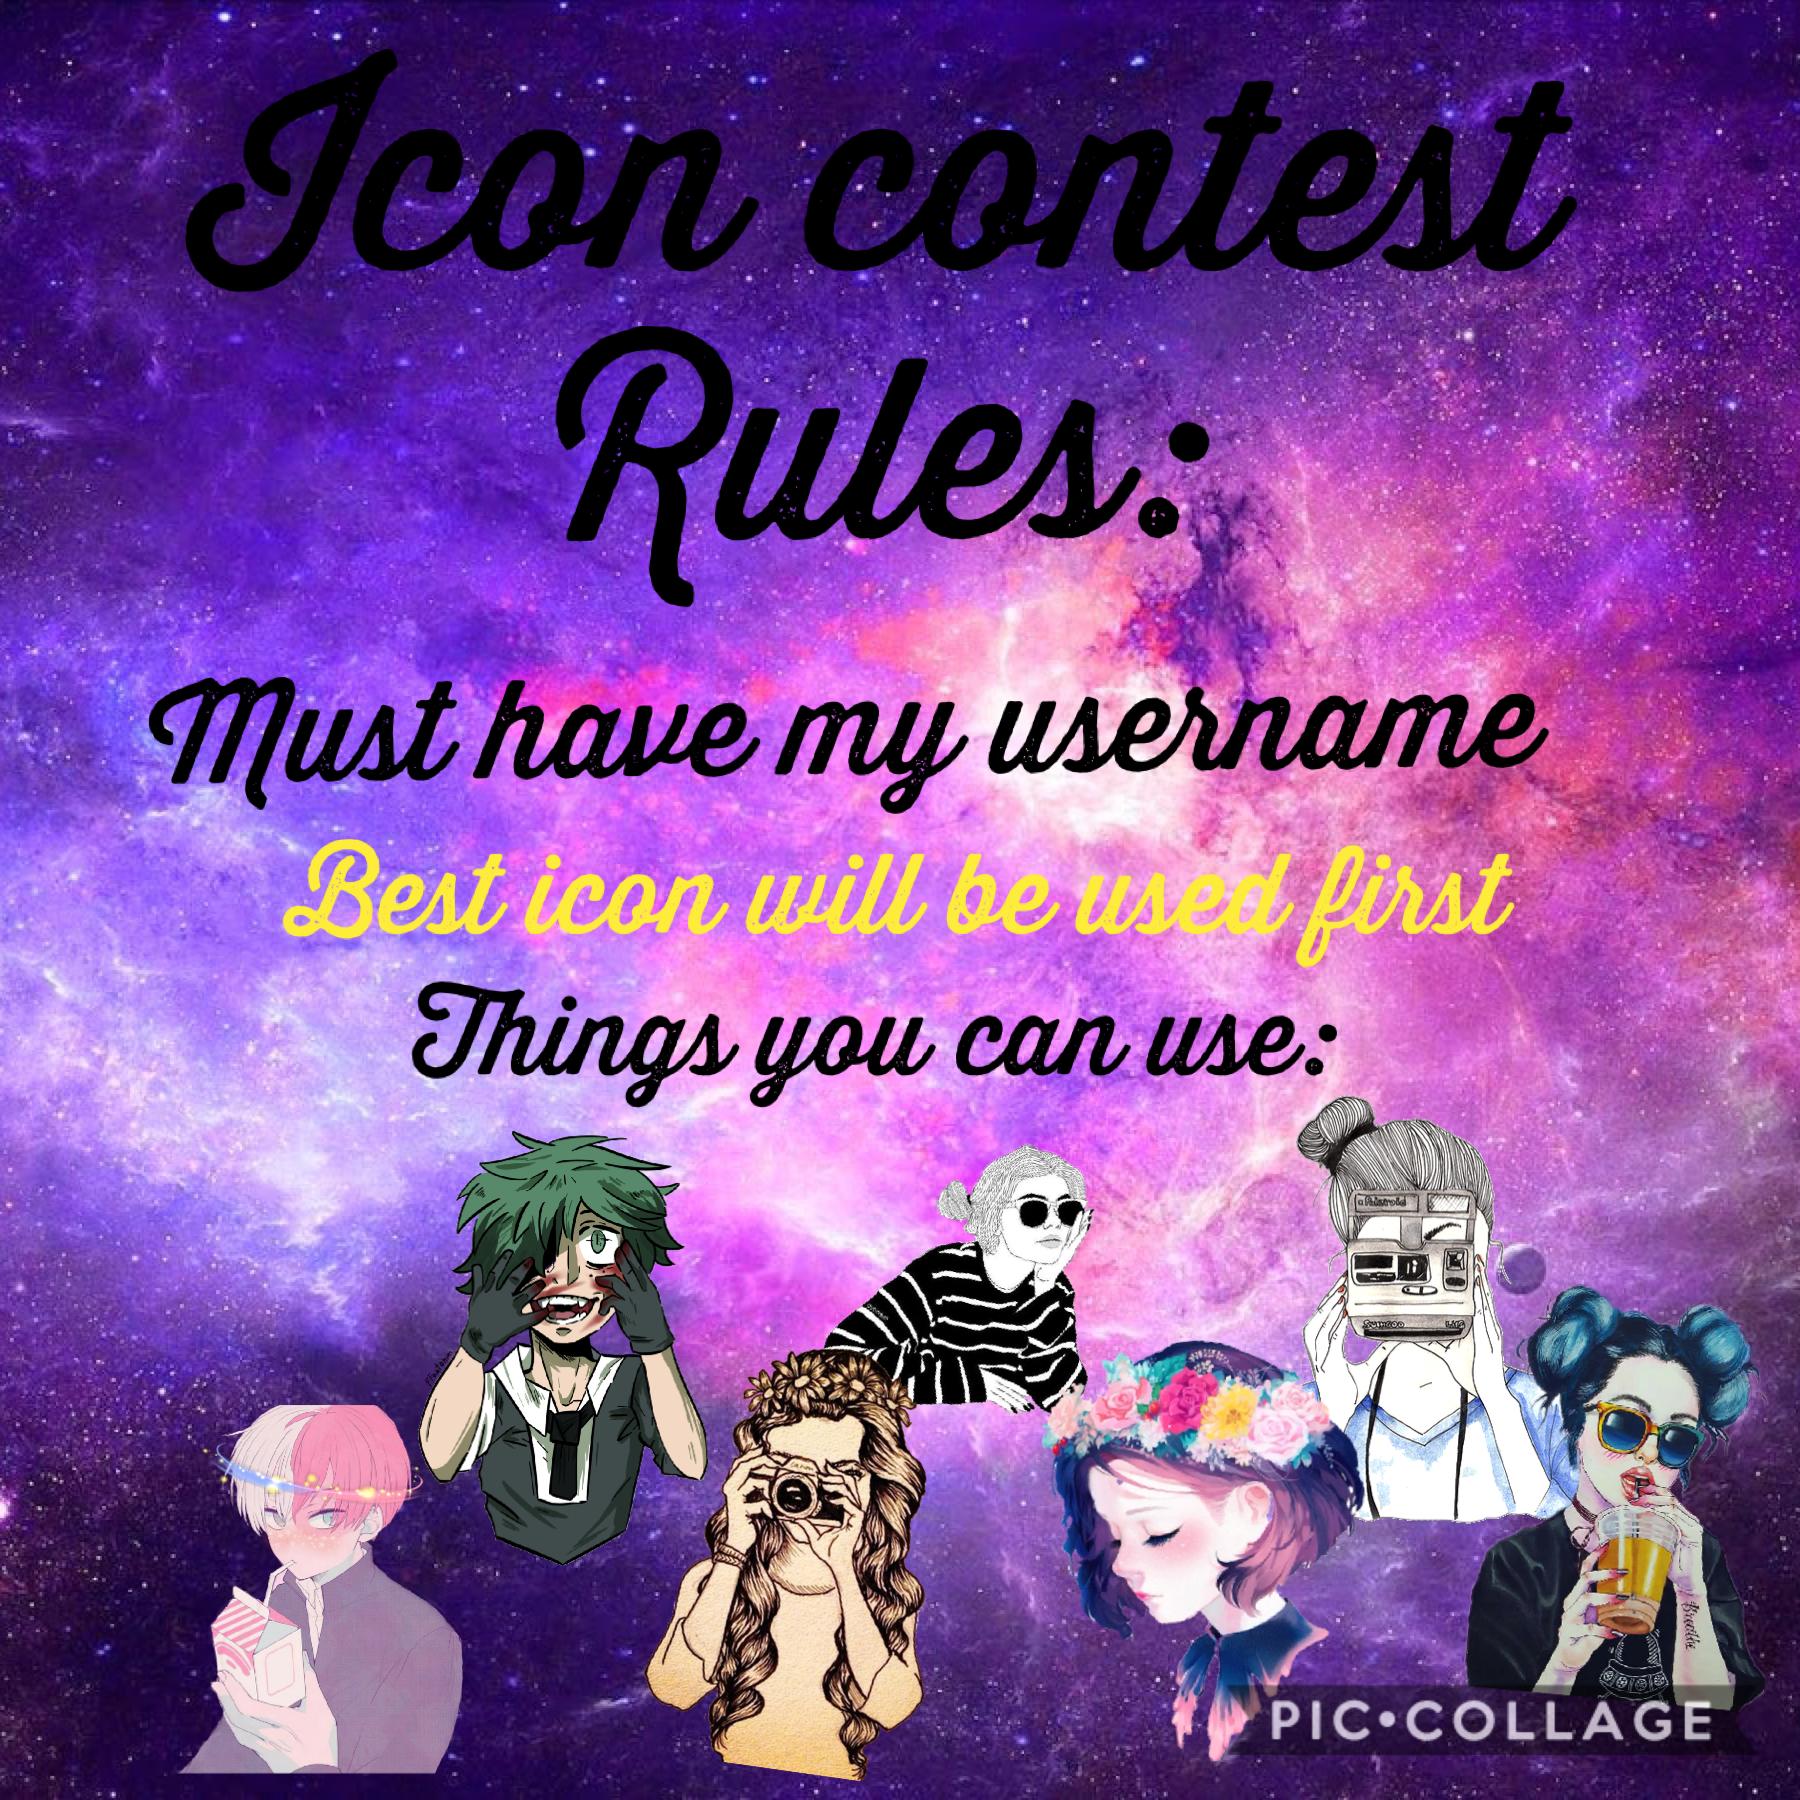 Icon contest